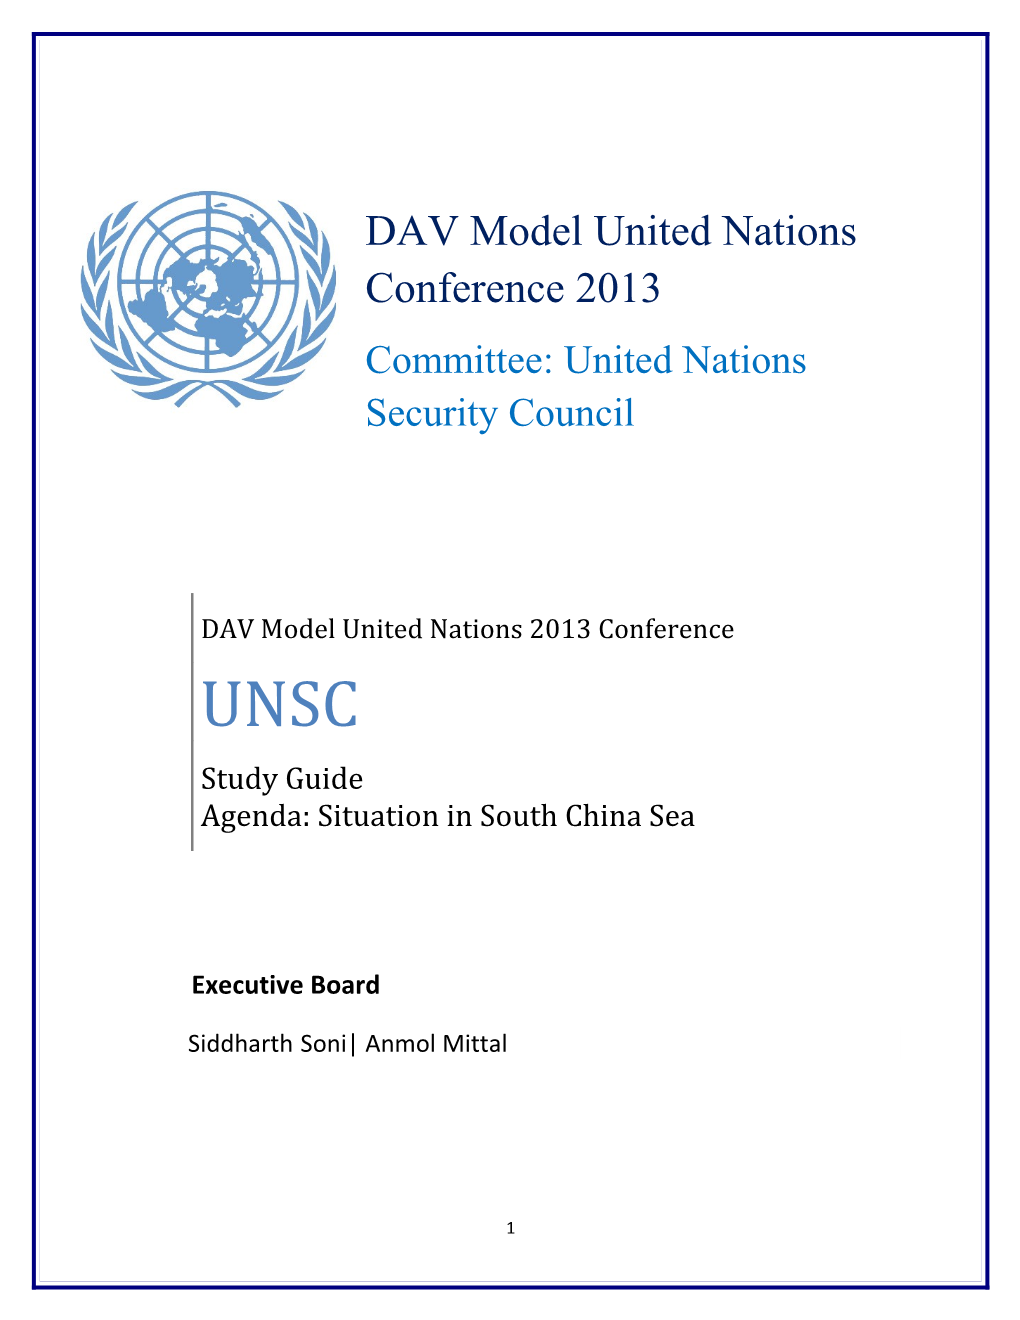 DAV Model United Nations Conference 2013